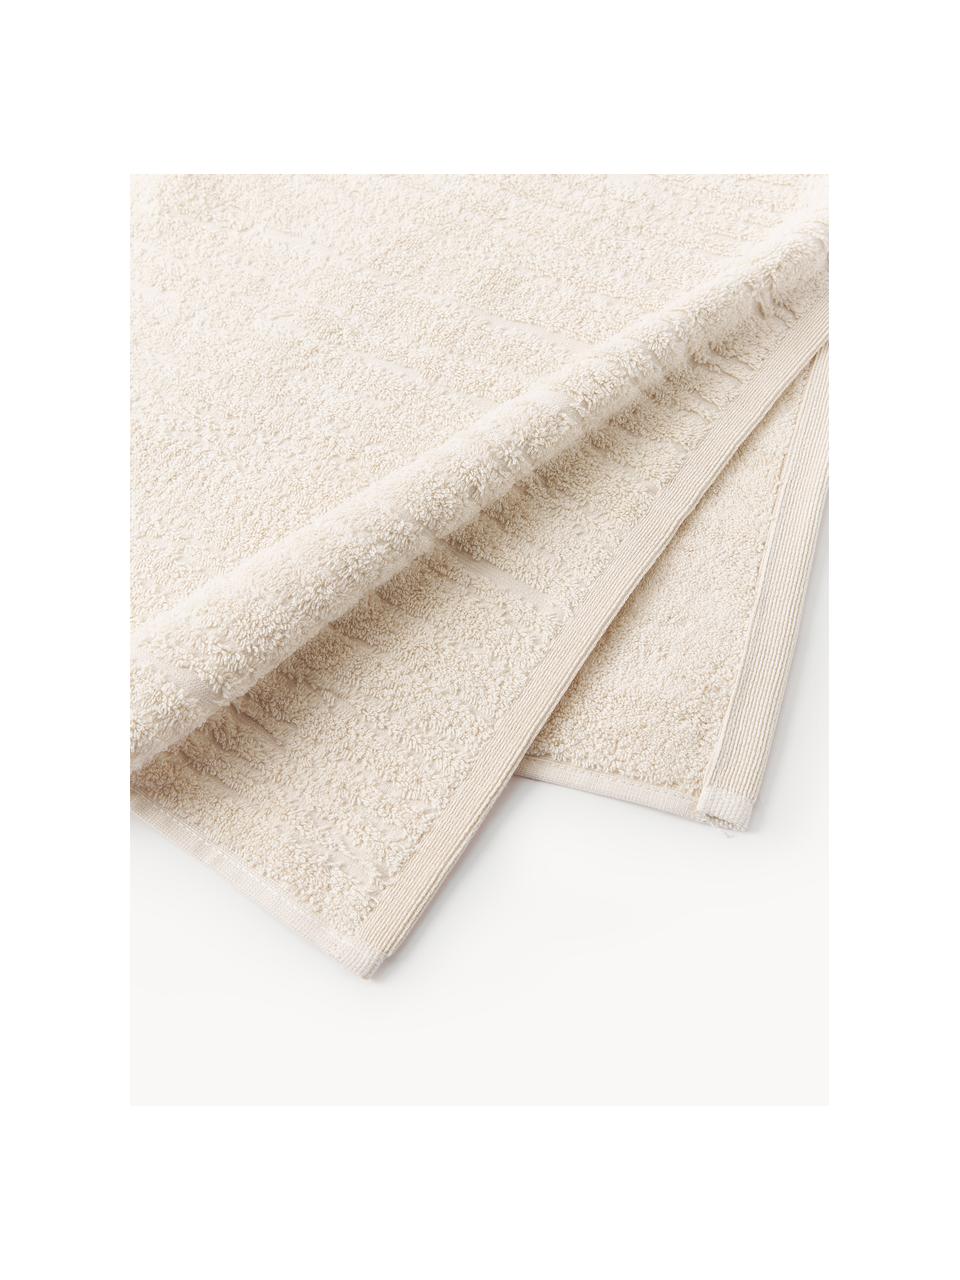 Set de toallas de algodón Audrina, tamaños diferentes, Beige claro, Set de 3 (toalla tocador, toalla lavabo y toalla ducha)